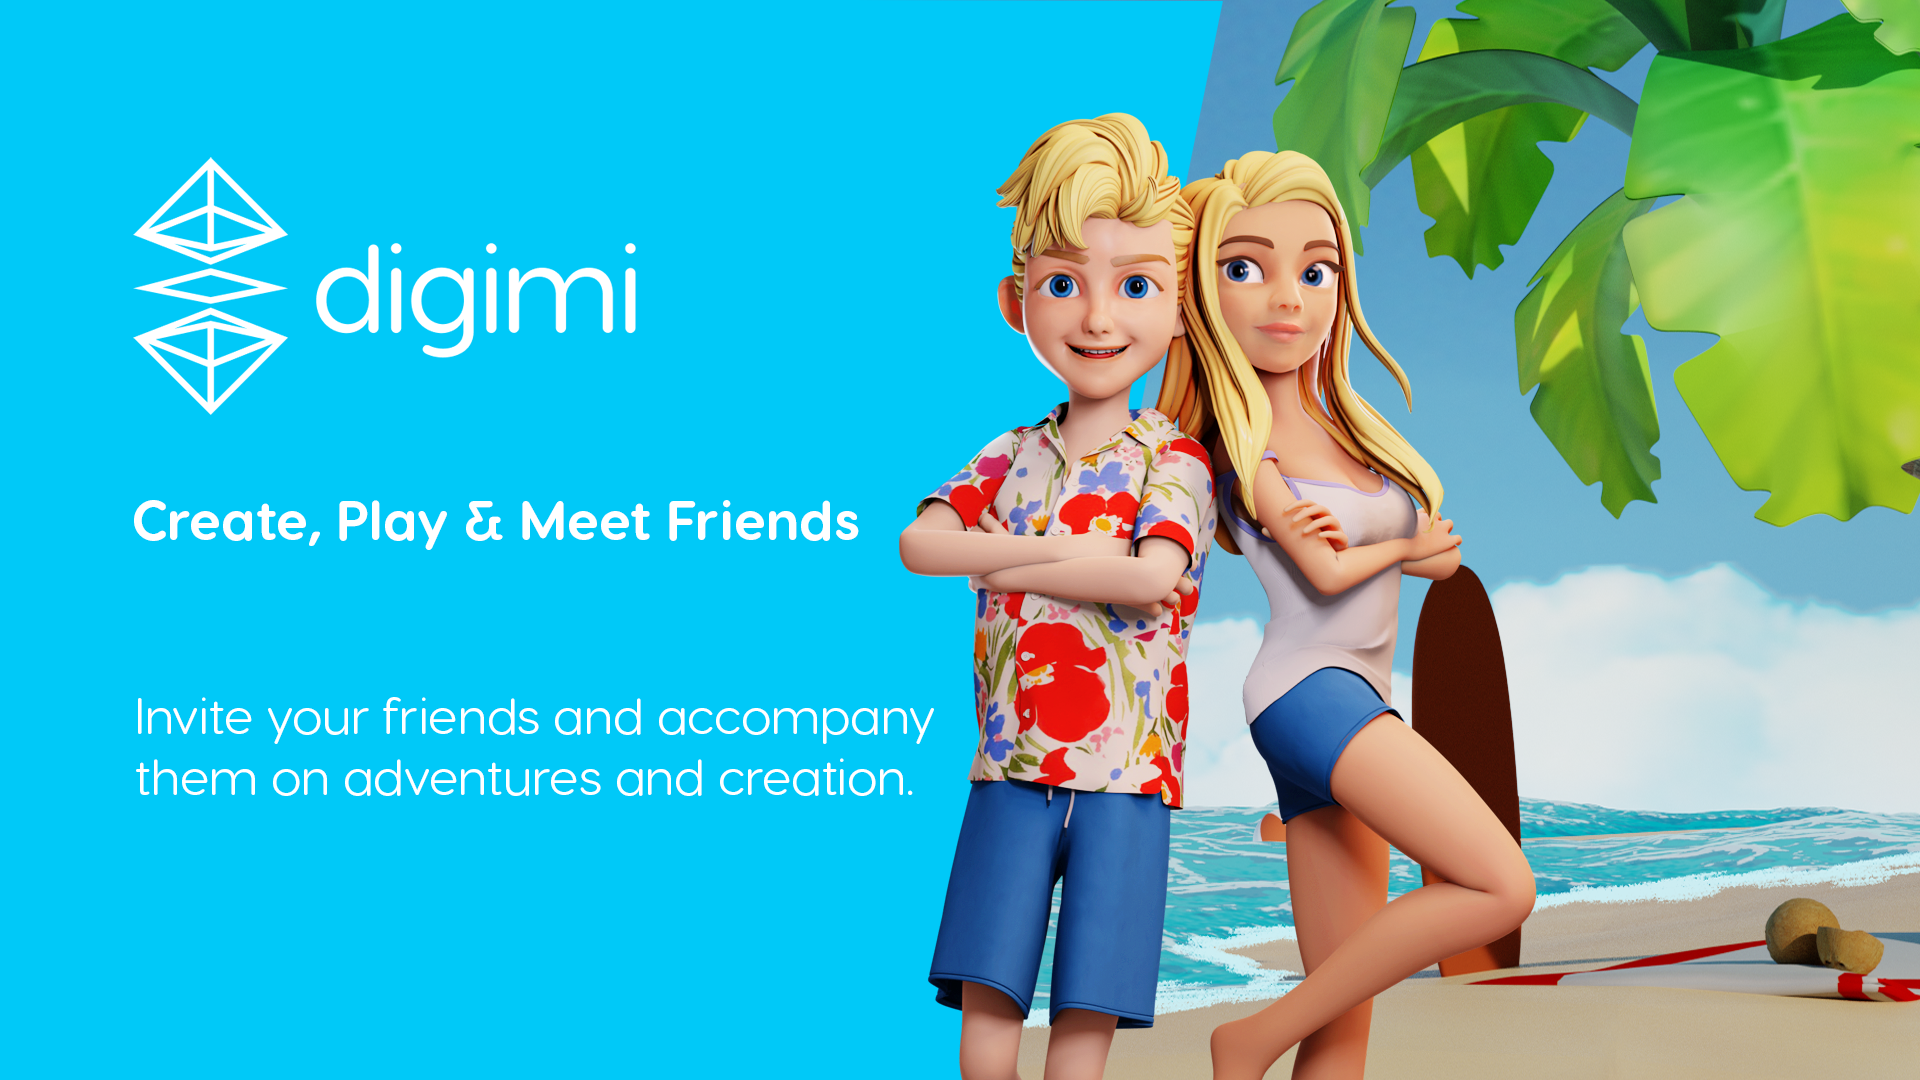 Digimi - Play & Meet friends